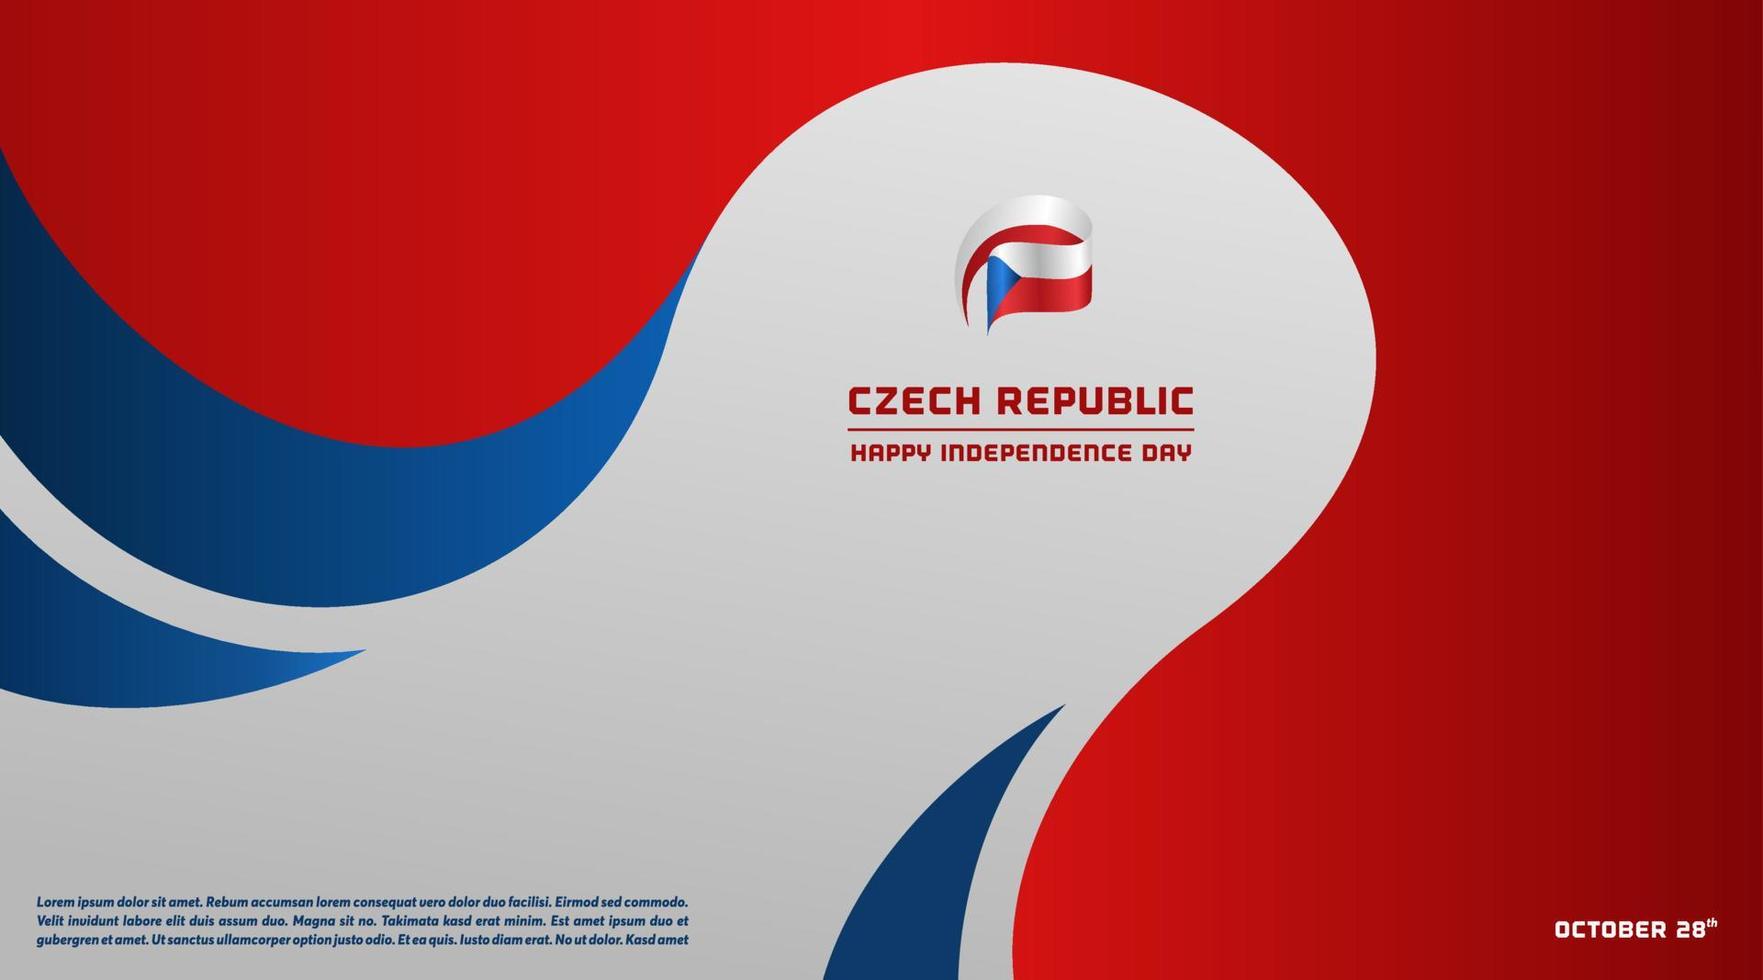 oberoende dag av tjeck republik vektor illustration, fira dag bakgrund